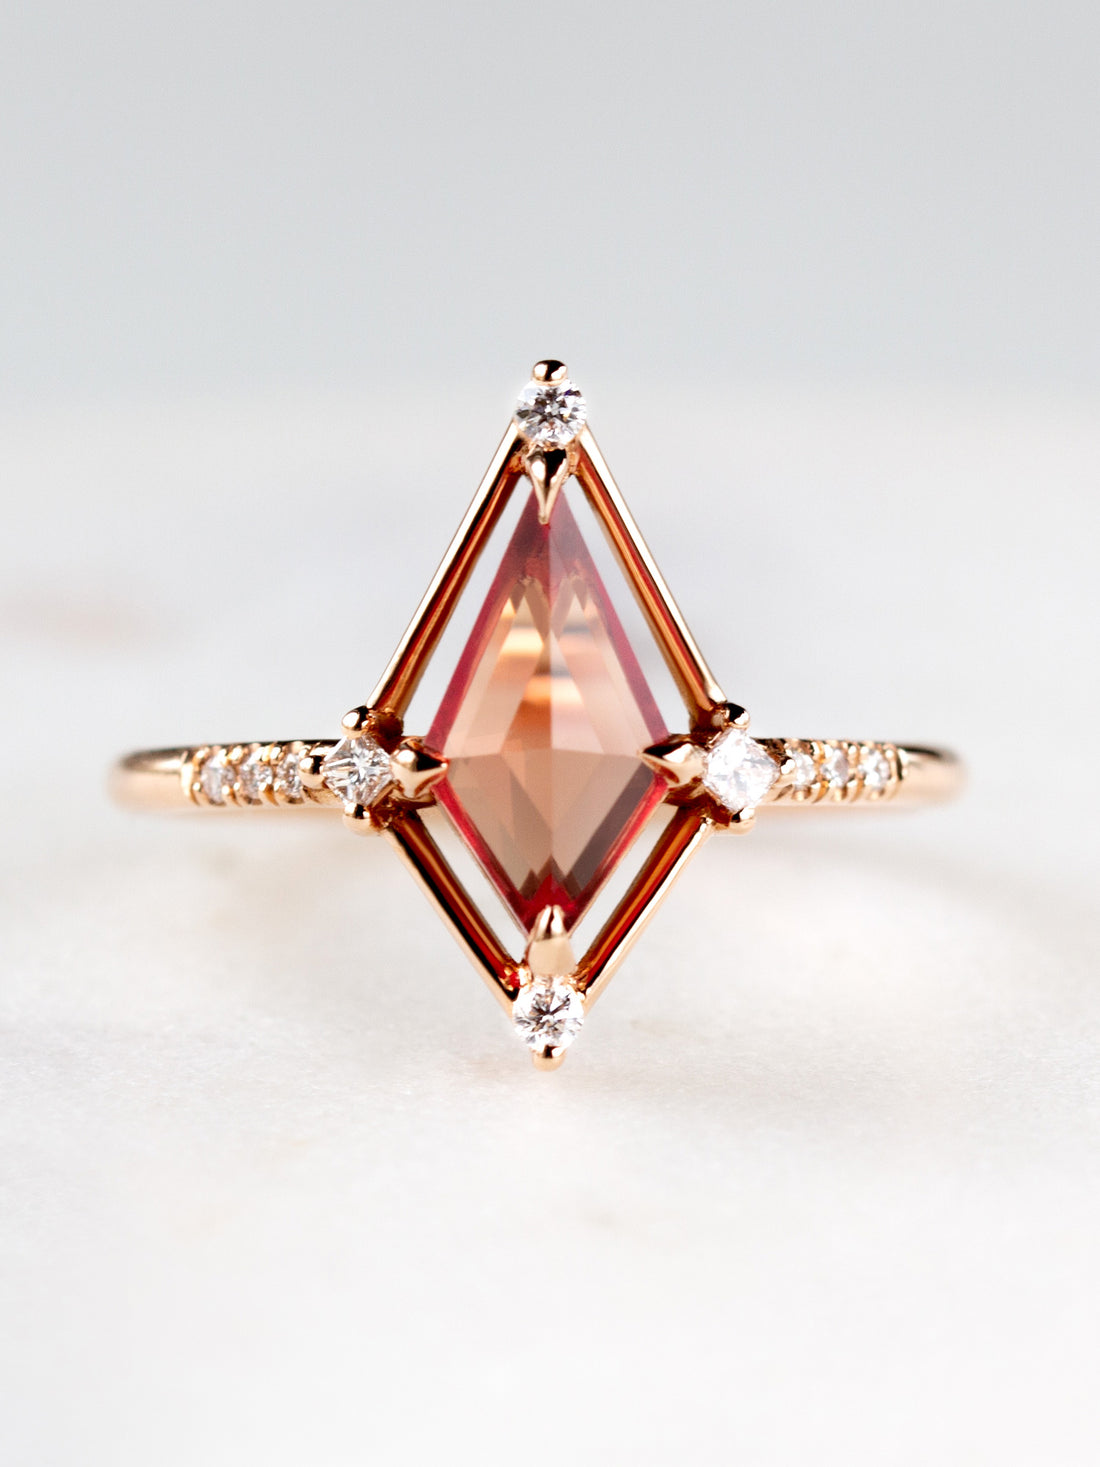 hiddenspace jewelry engagement ring unique fine jewelry sapphire proposal ring diamond art deco designer jewelry 1